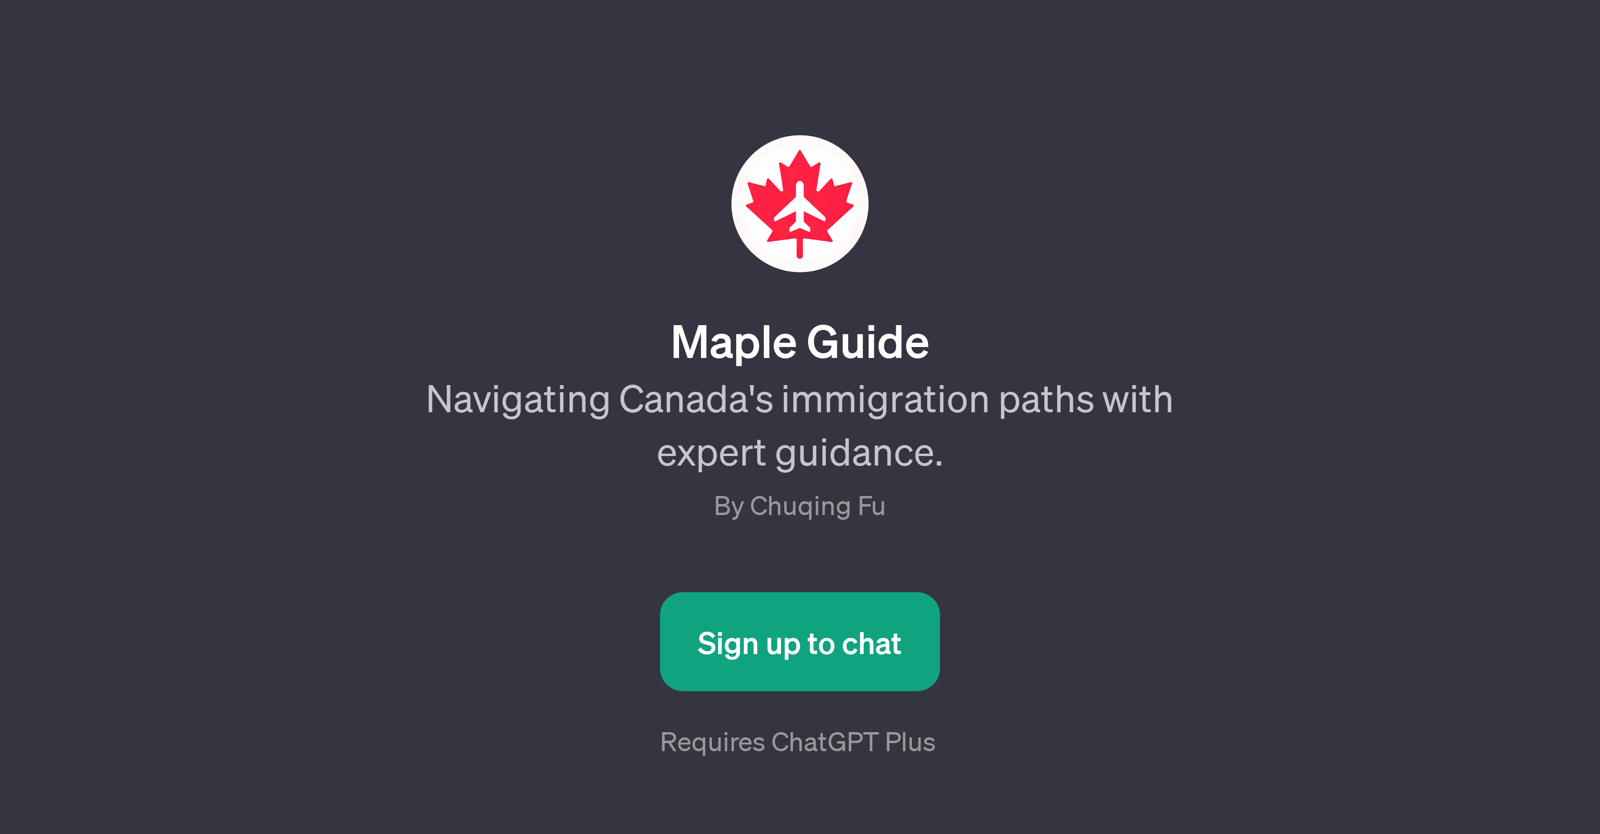 Maple Guide website